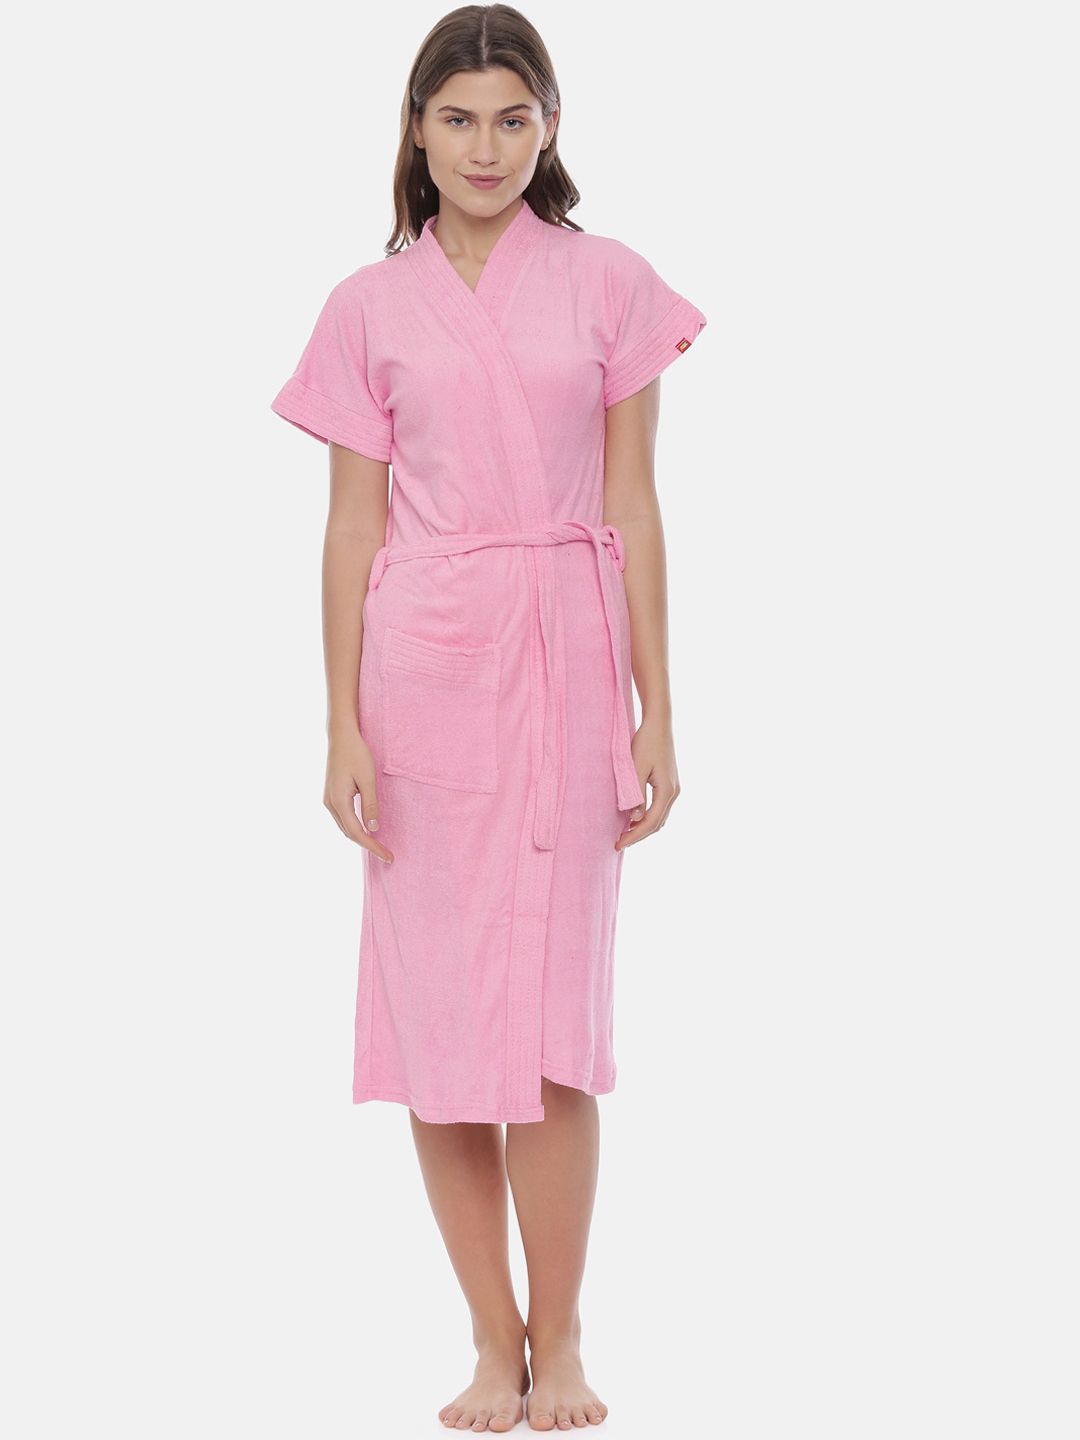 GOLDSTROMS Women Pink Solid Bathrobe Price in India